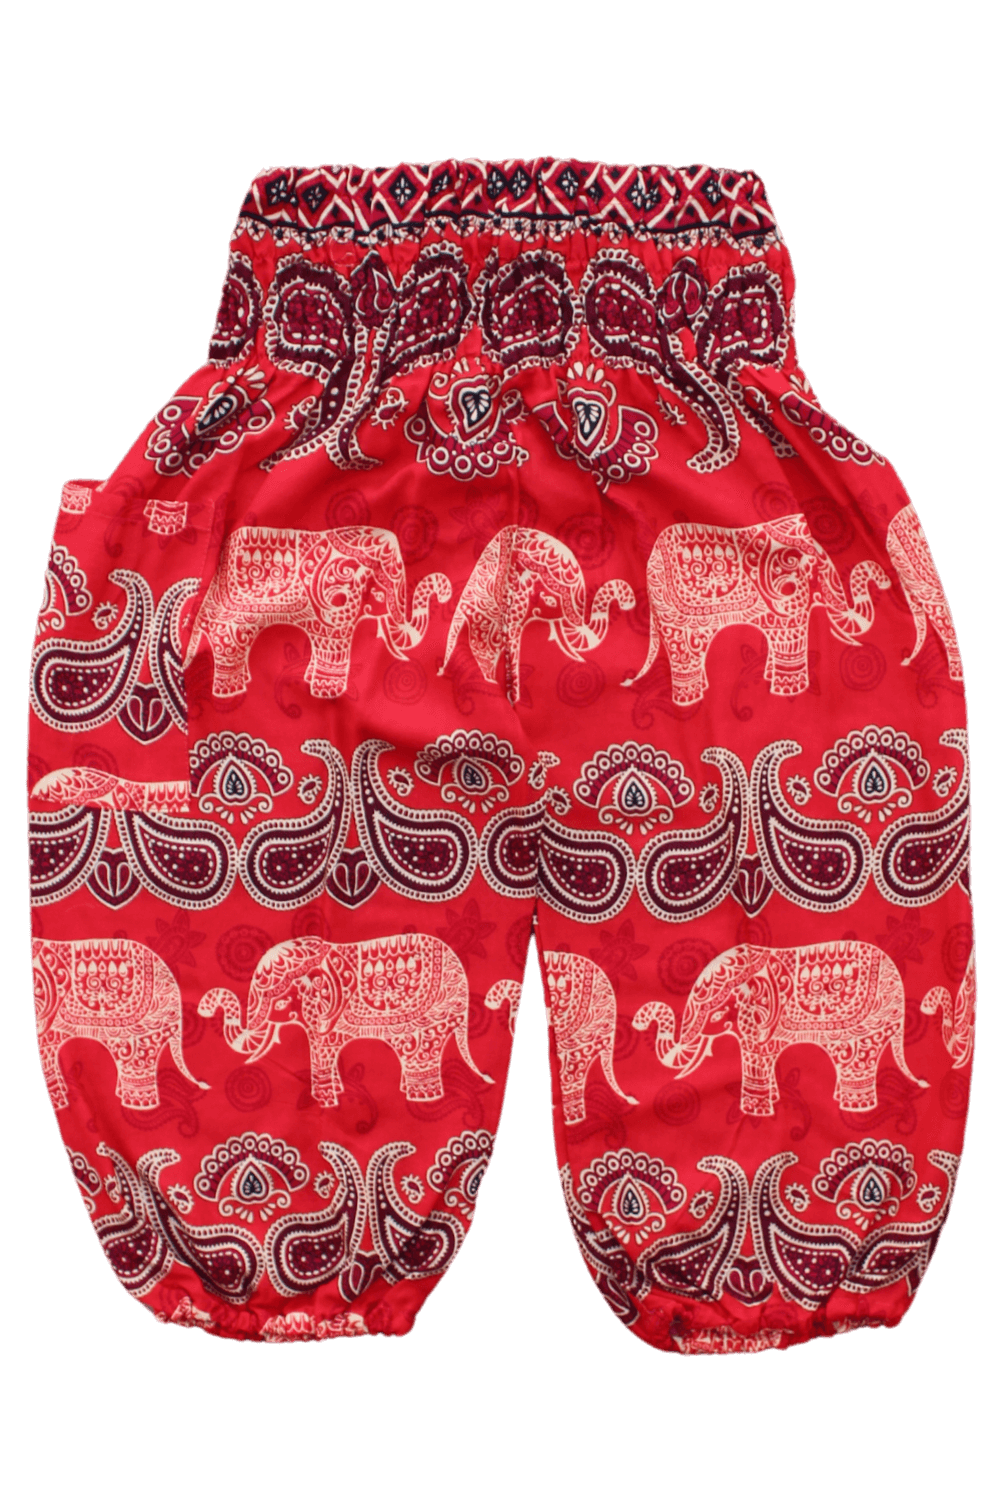 Thailands Greatest Attire  The Elephant Pants  Tar Heel Voyager